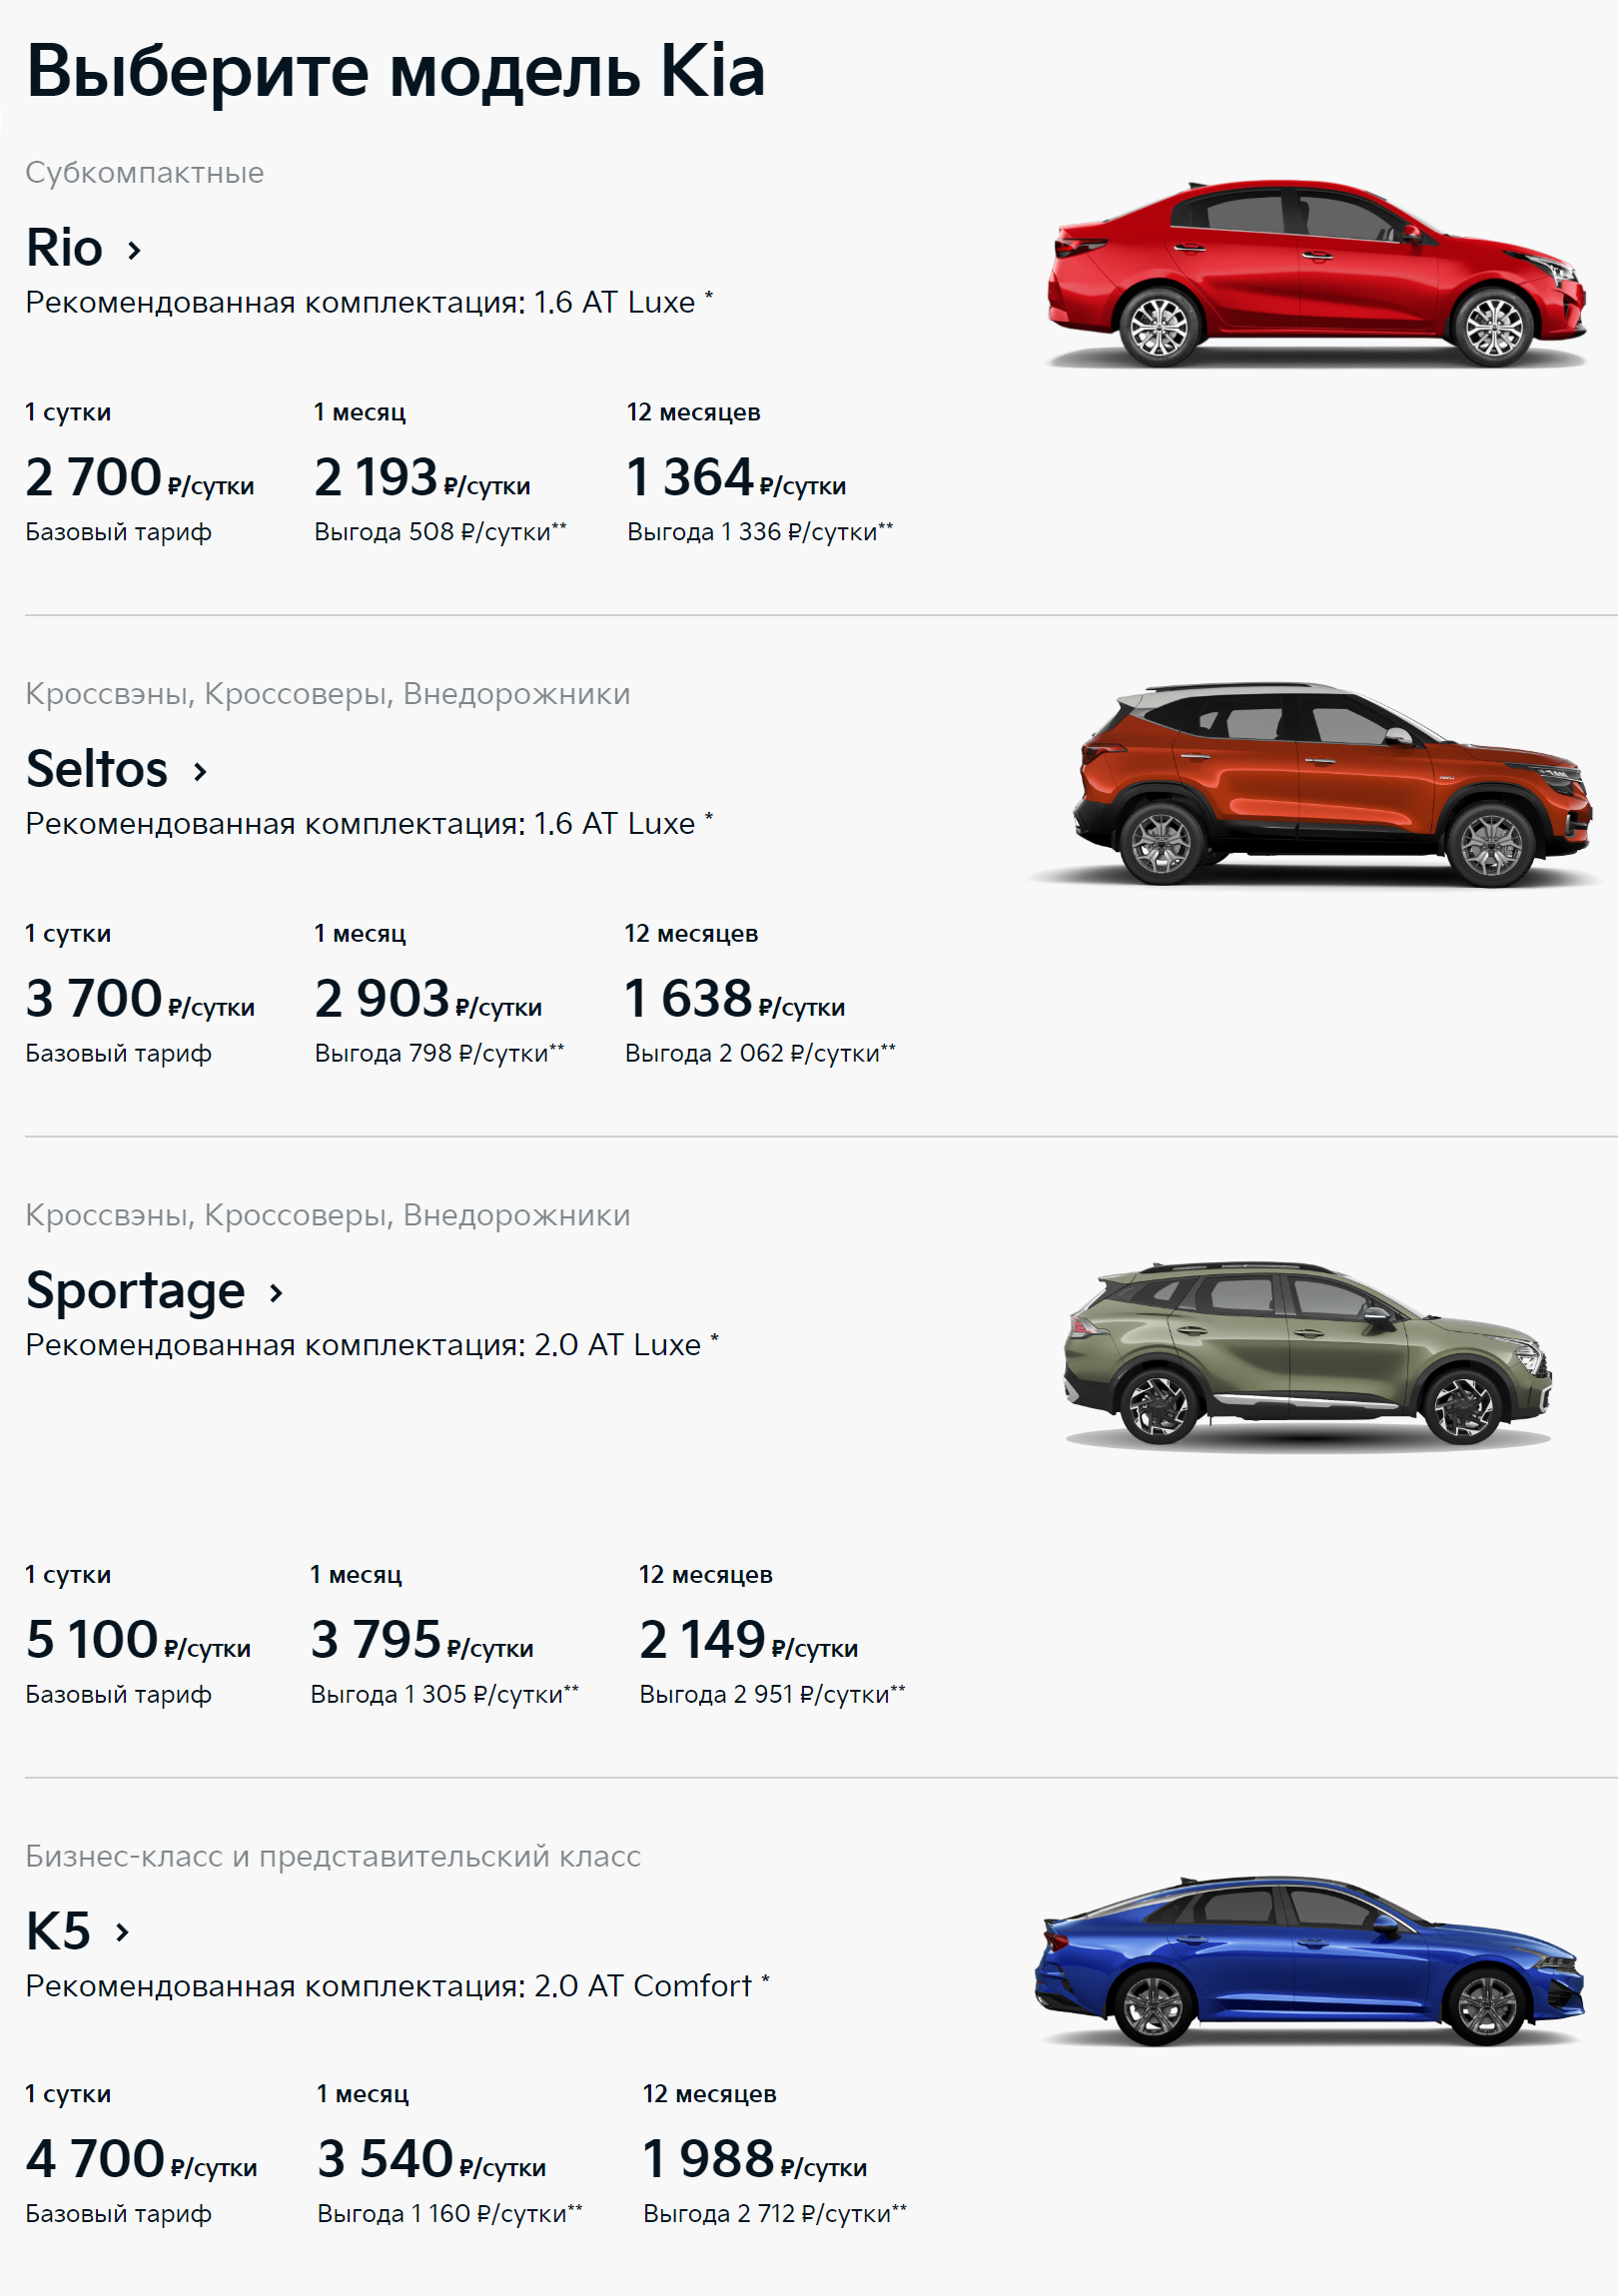 Для аренды в Kia Mobility доступно пять моделей: от бюджетного Рио до представительского K5